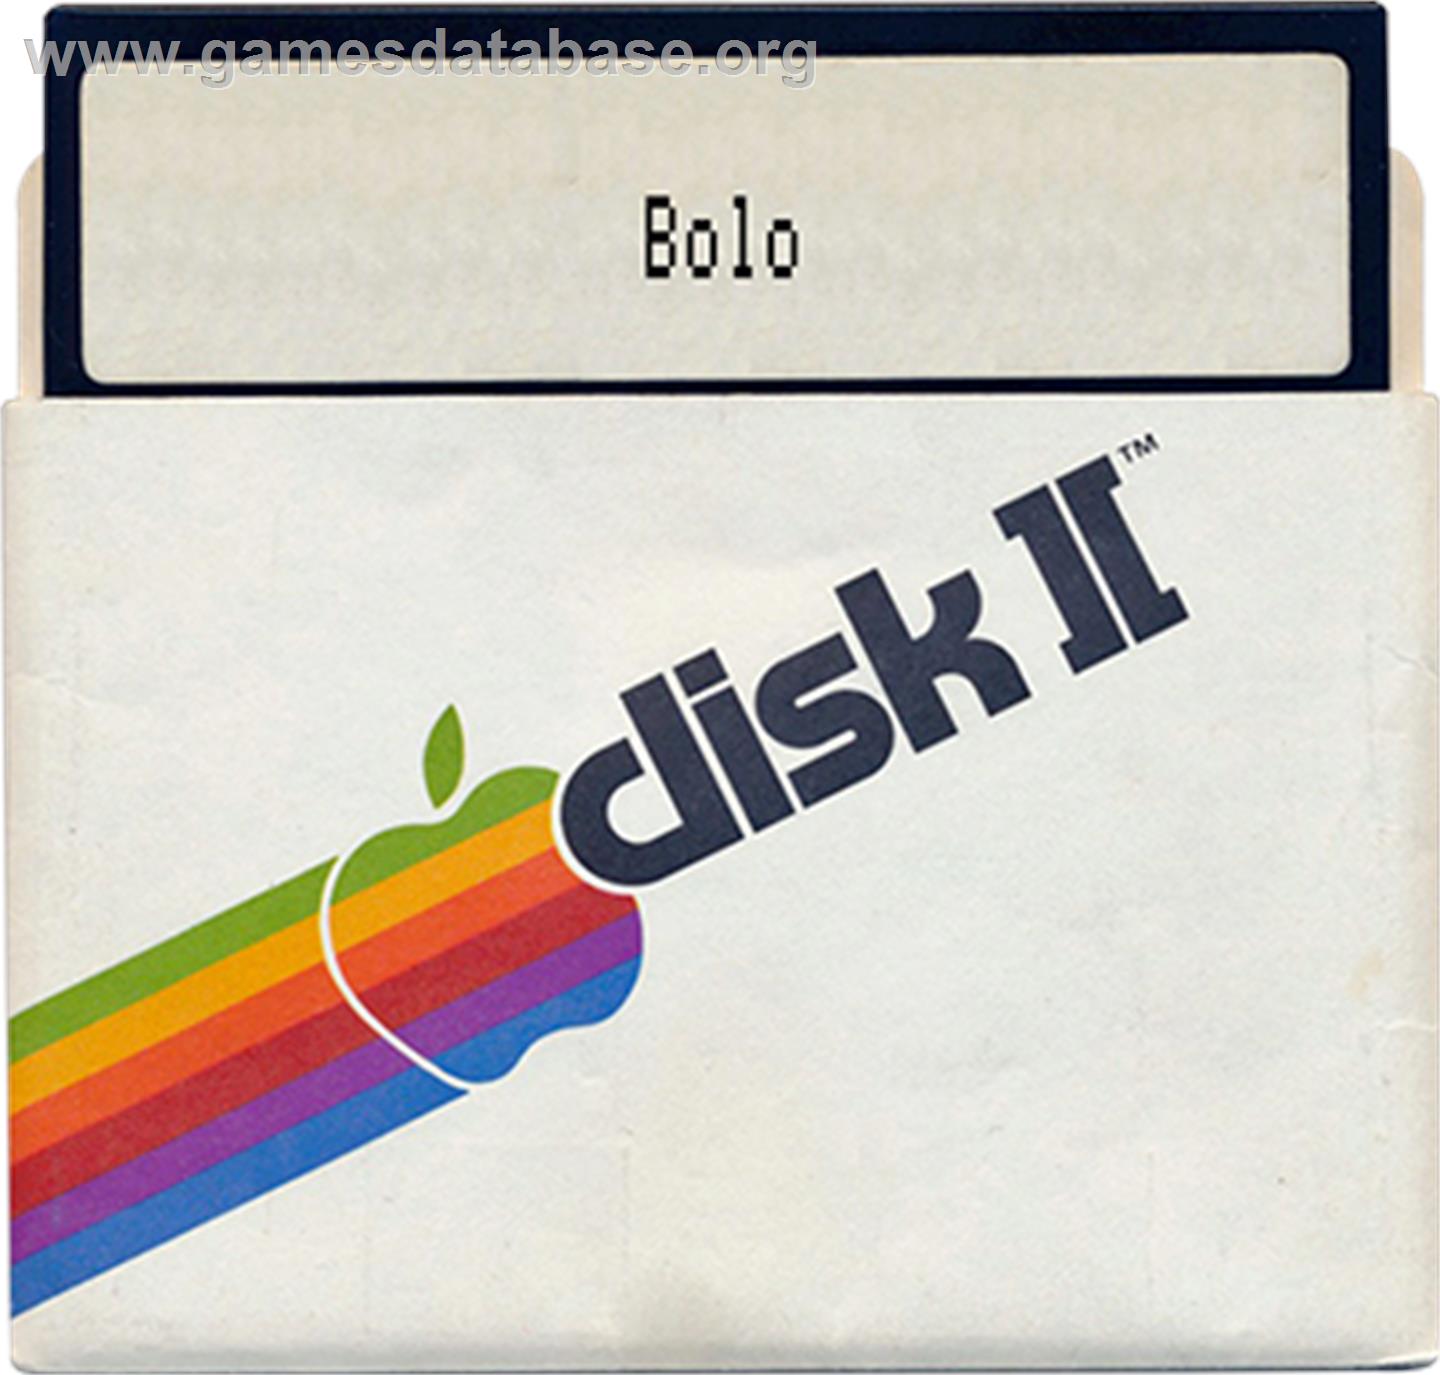 Bolo - Apple II - Artwork - Disc